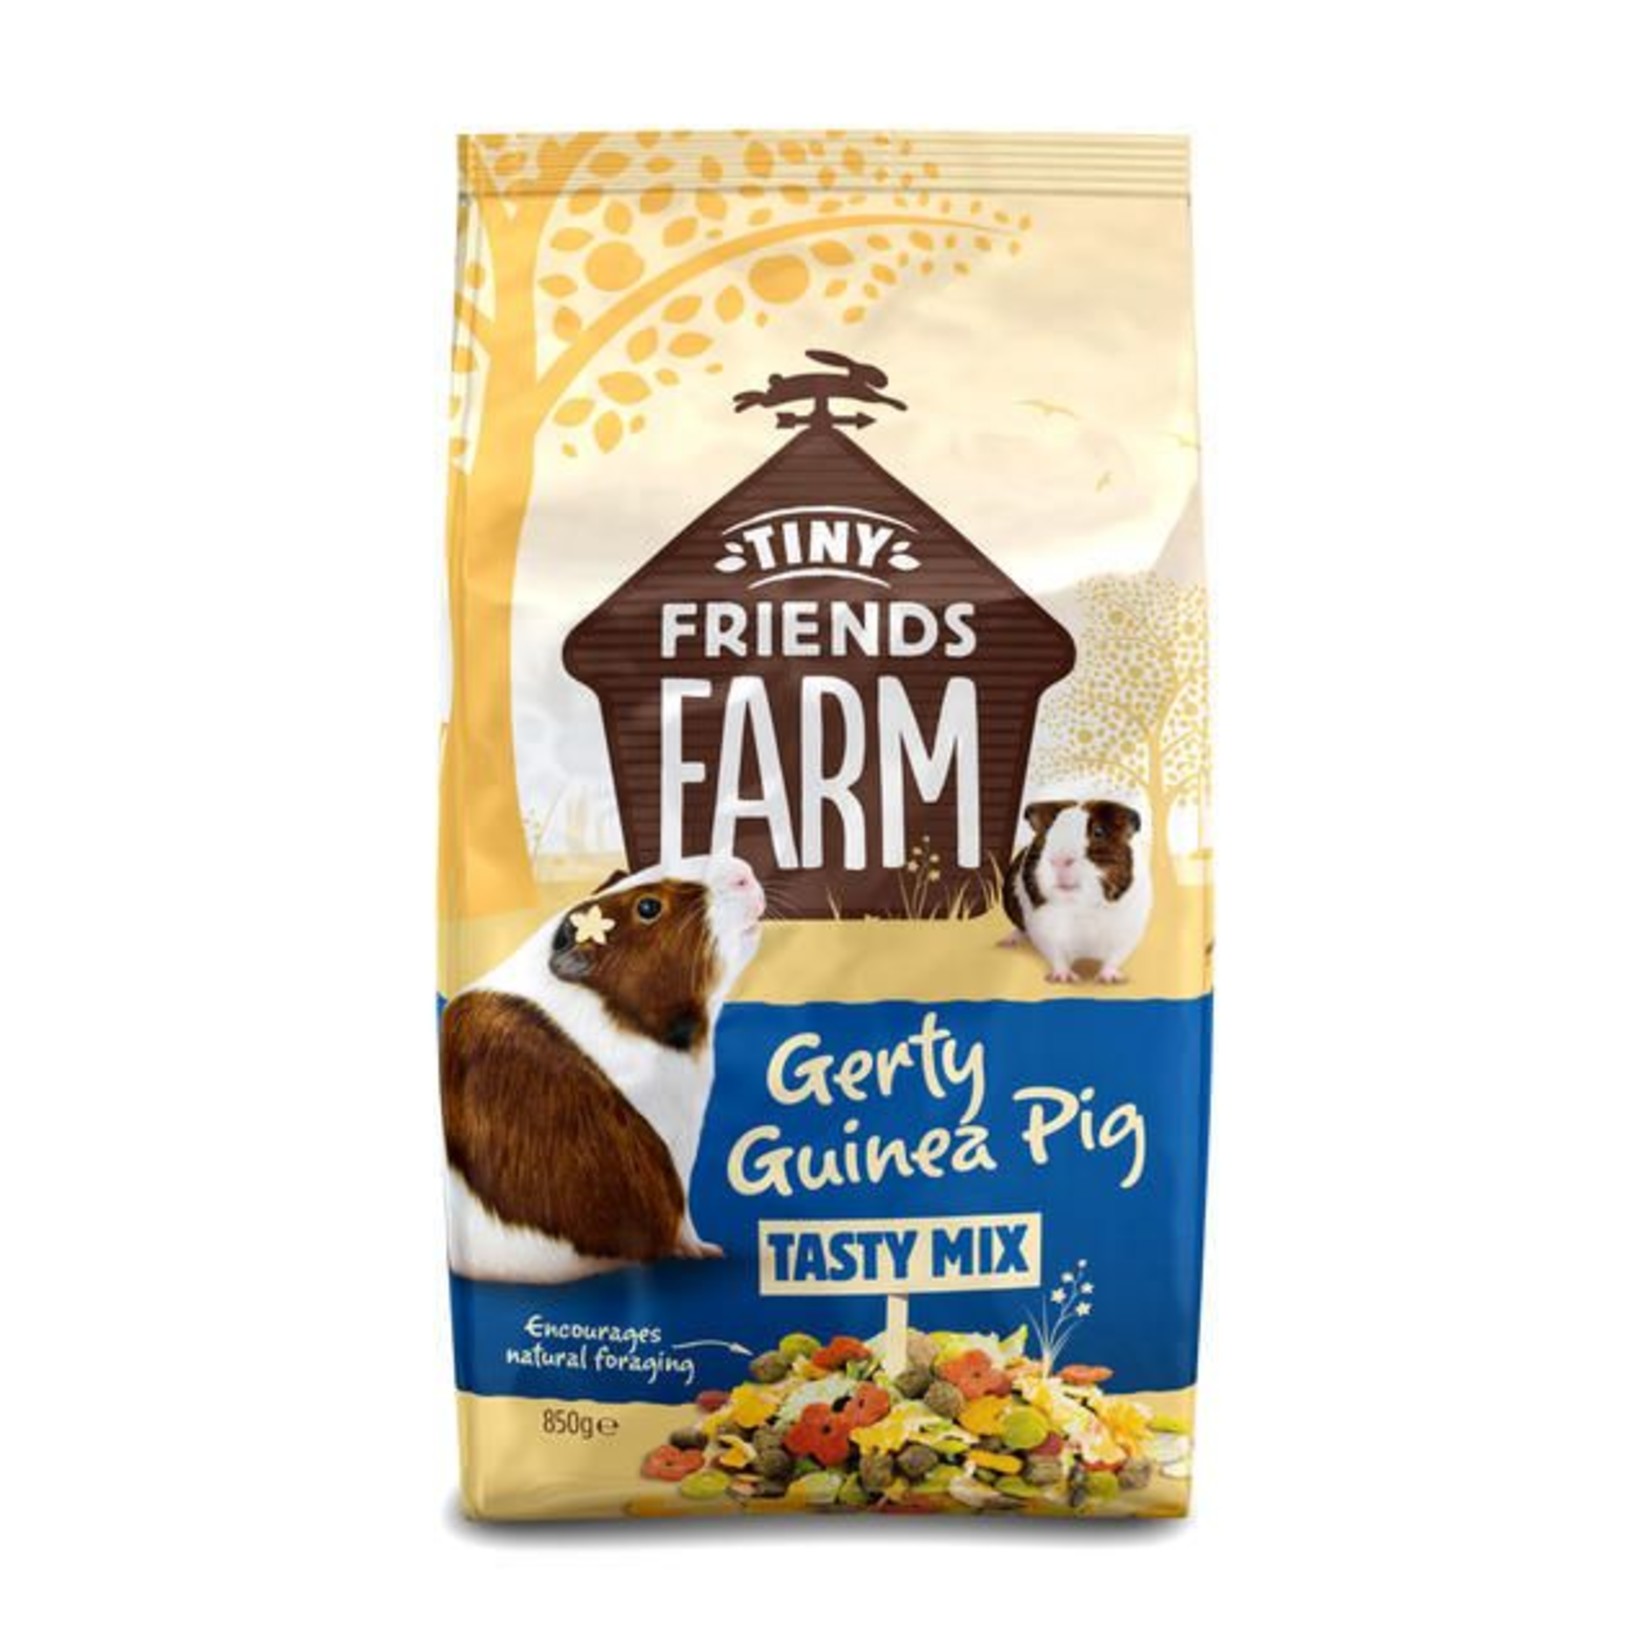 Supreme Tiny Friends Farm Gerty Guinea Pig Tasty Mix Food, 850g